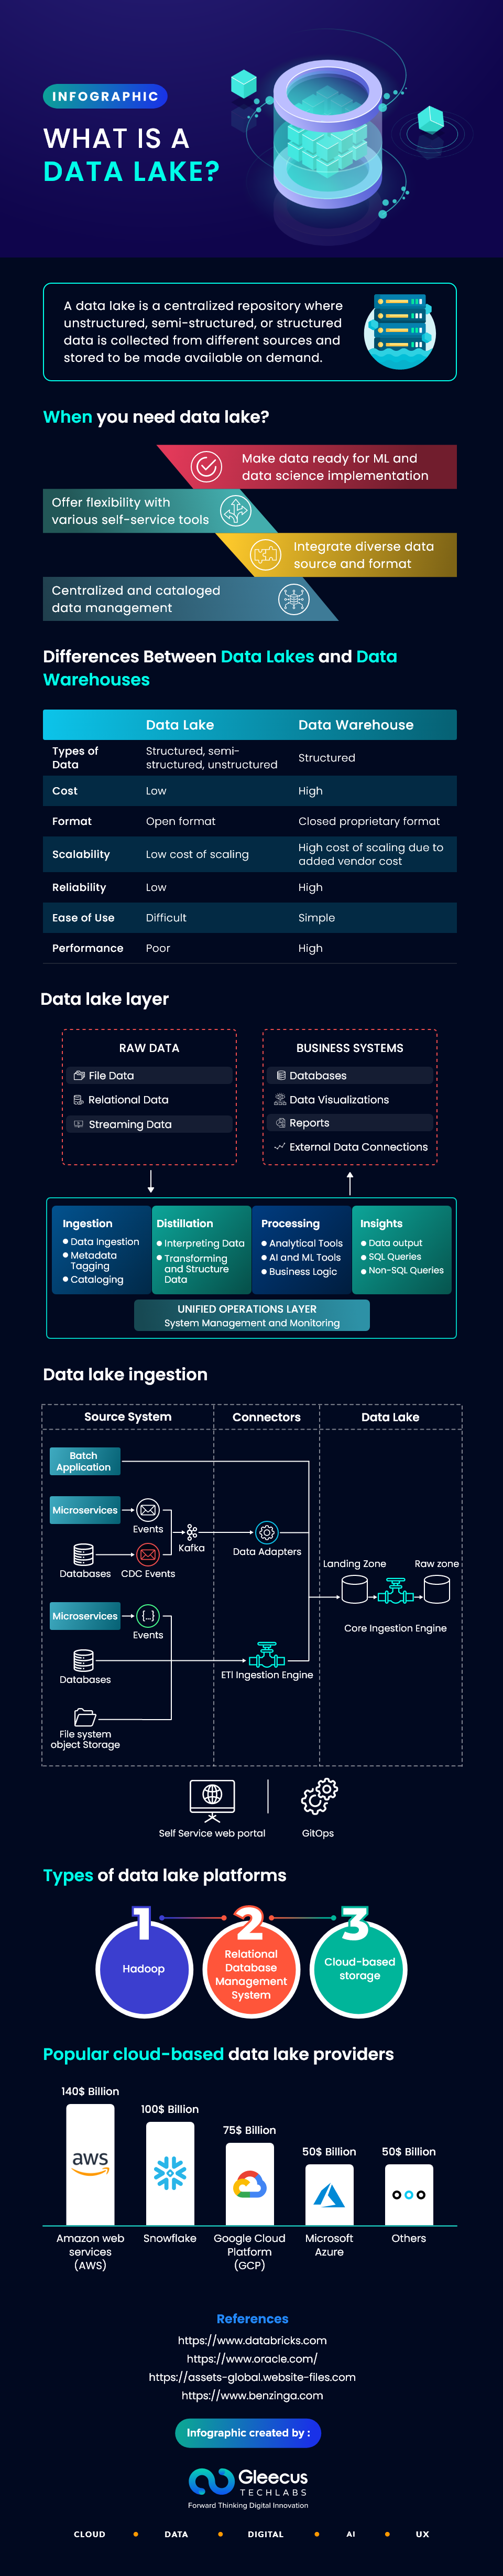 Data lake infographic